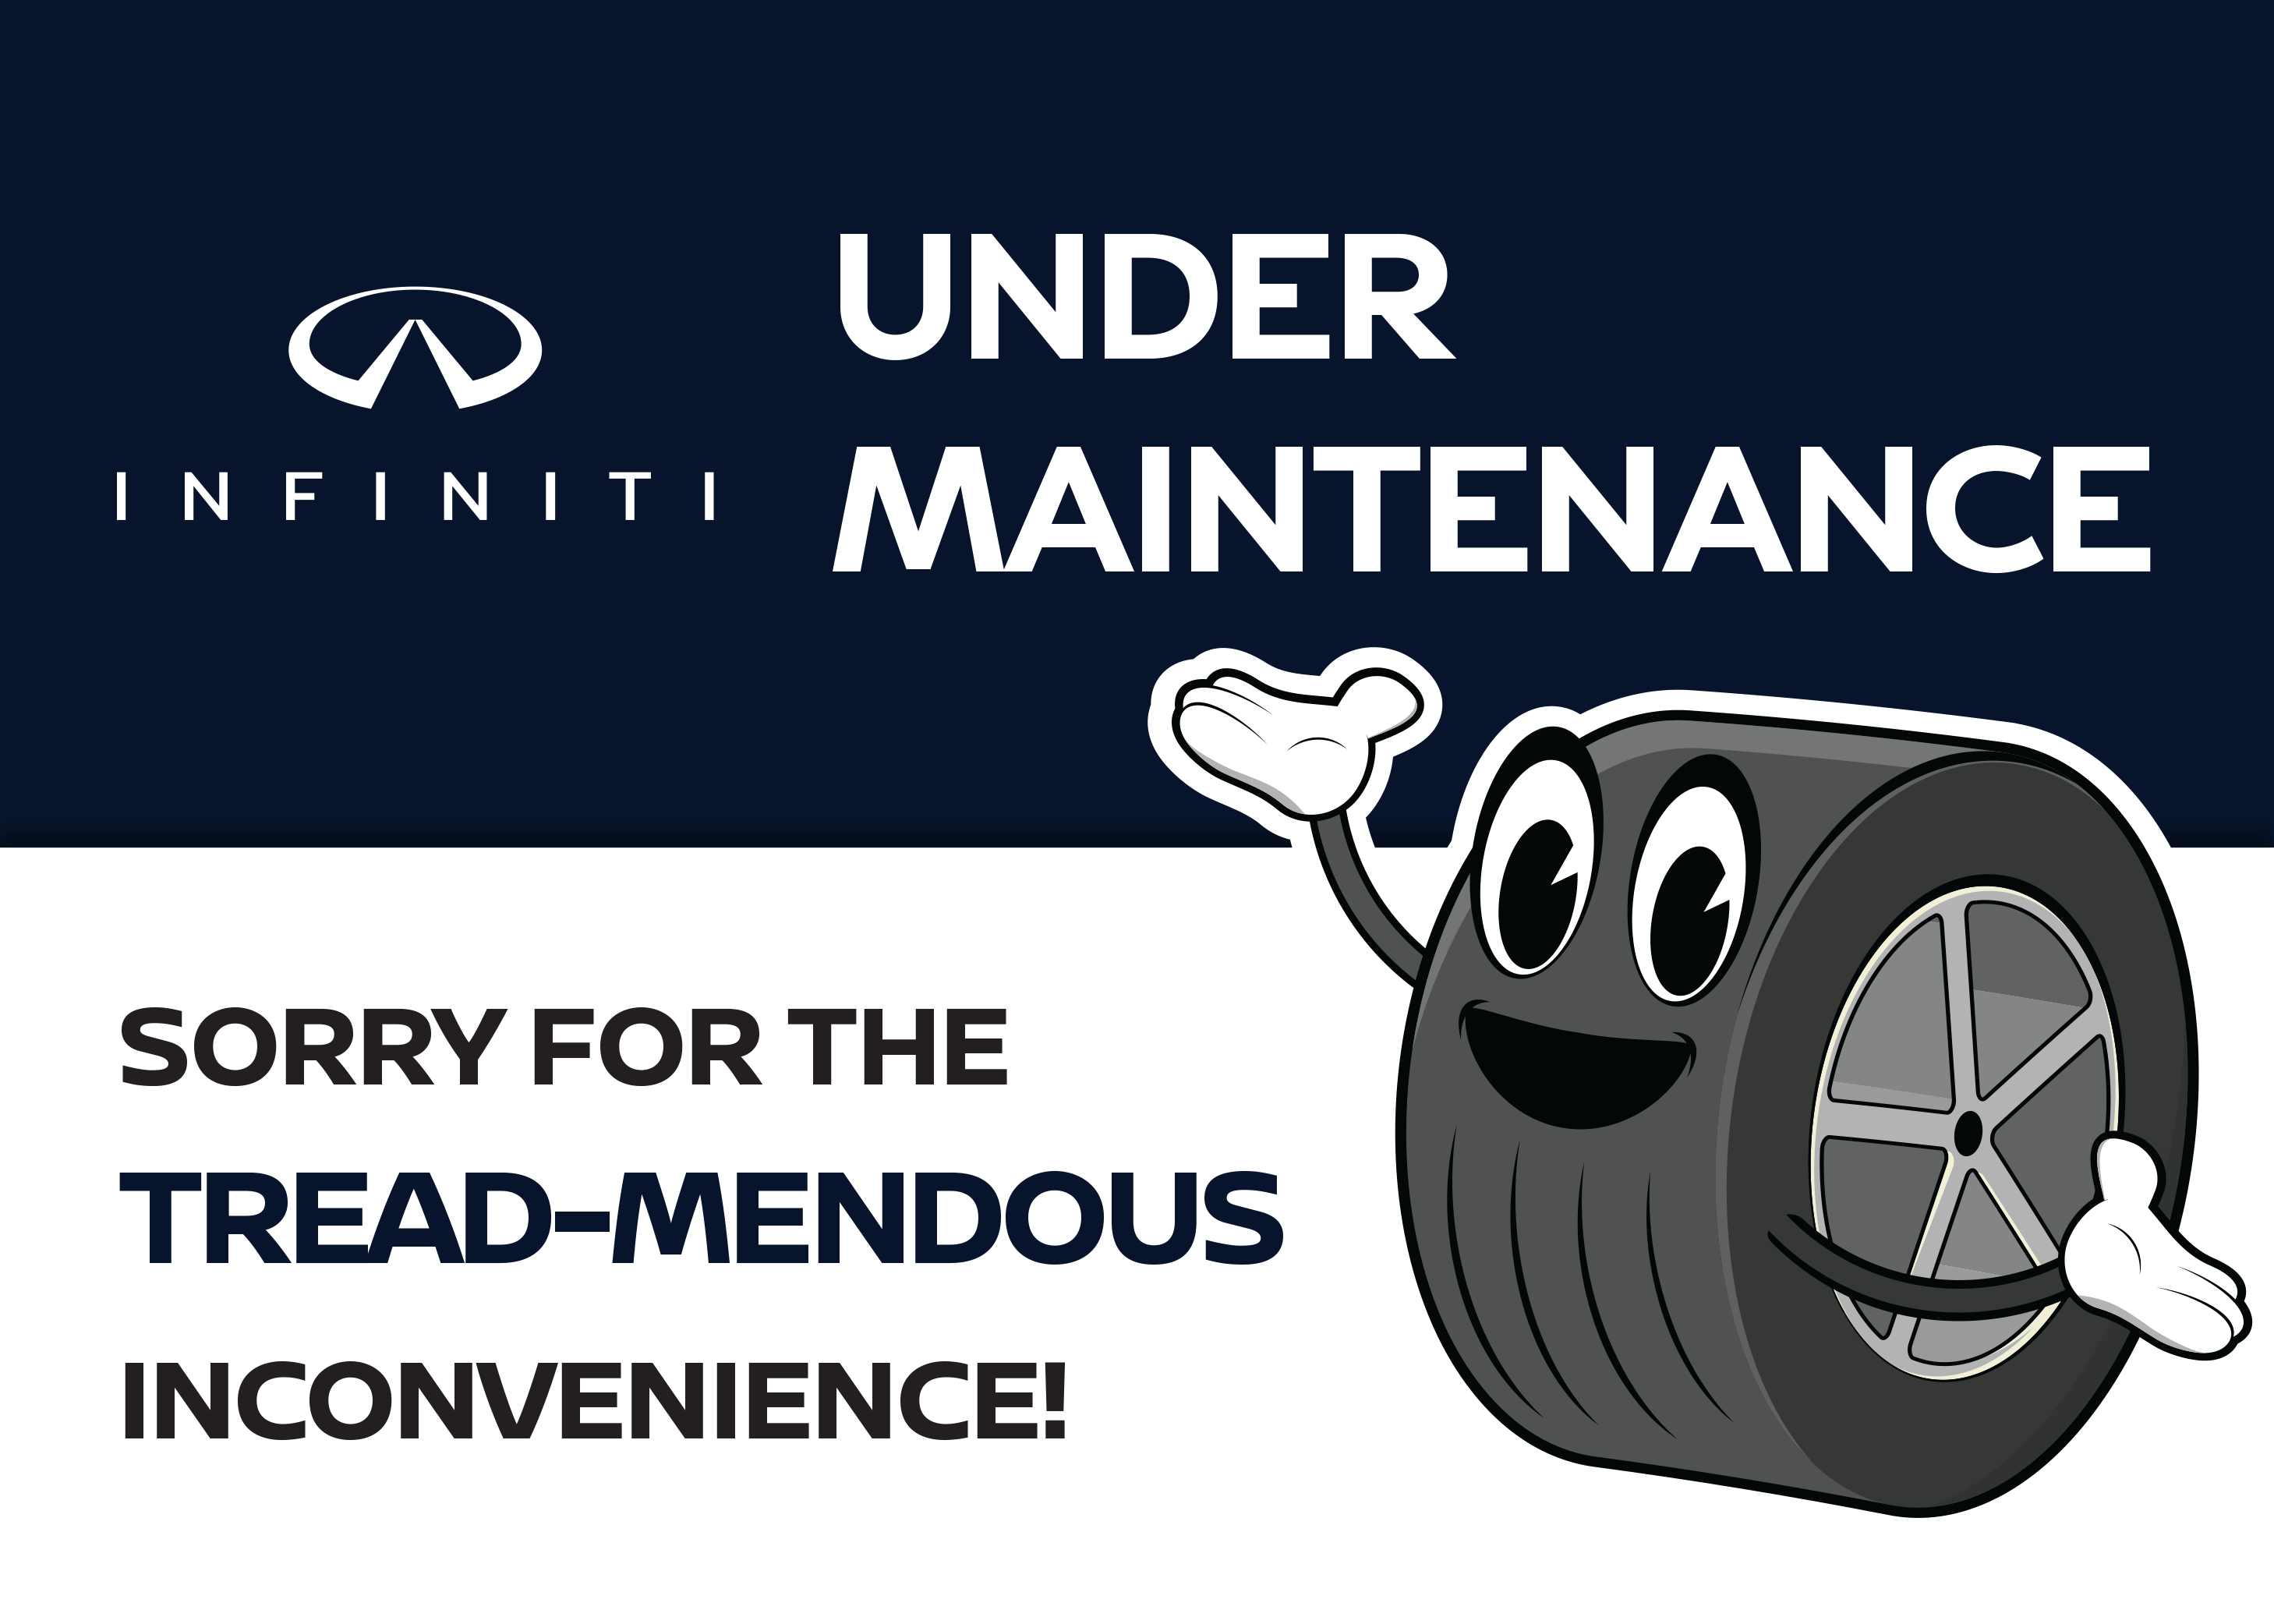 Under maintenance. Sorry for the tread-mendous inconvenience!